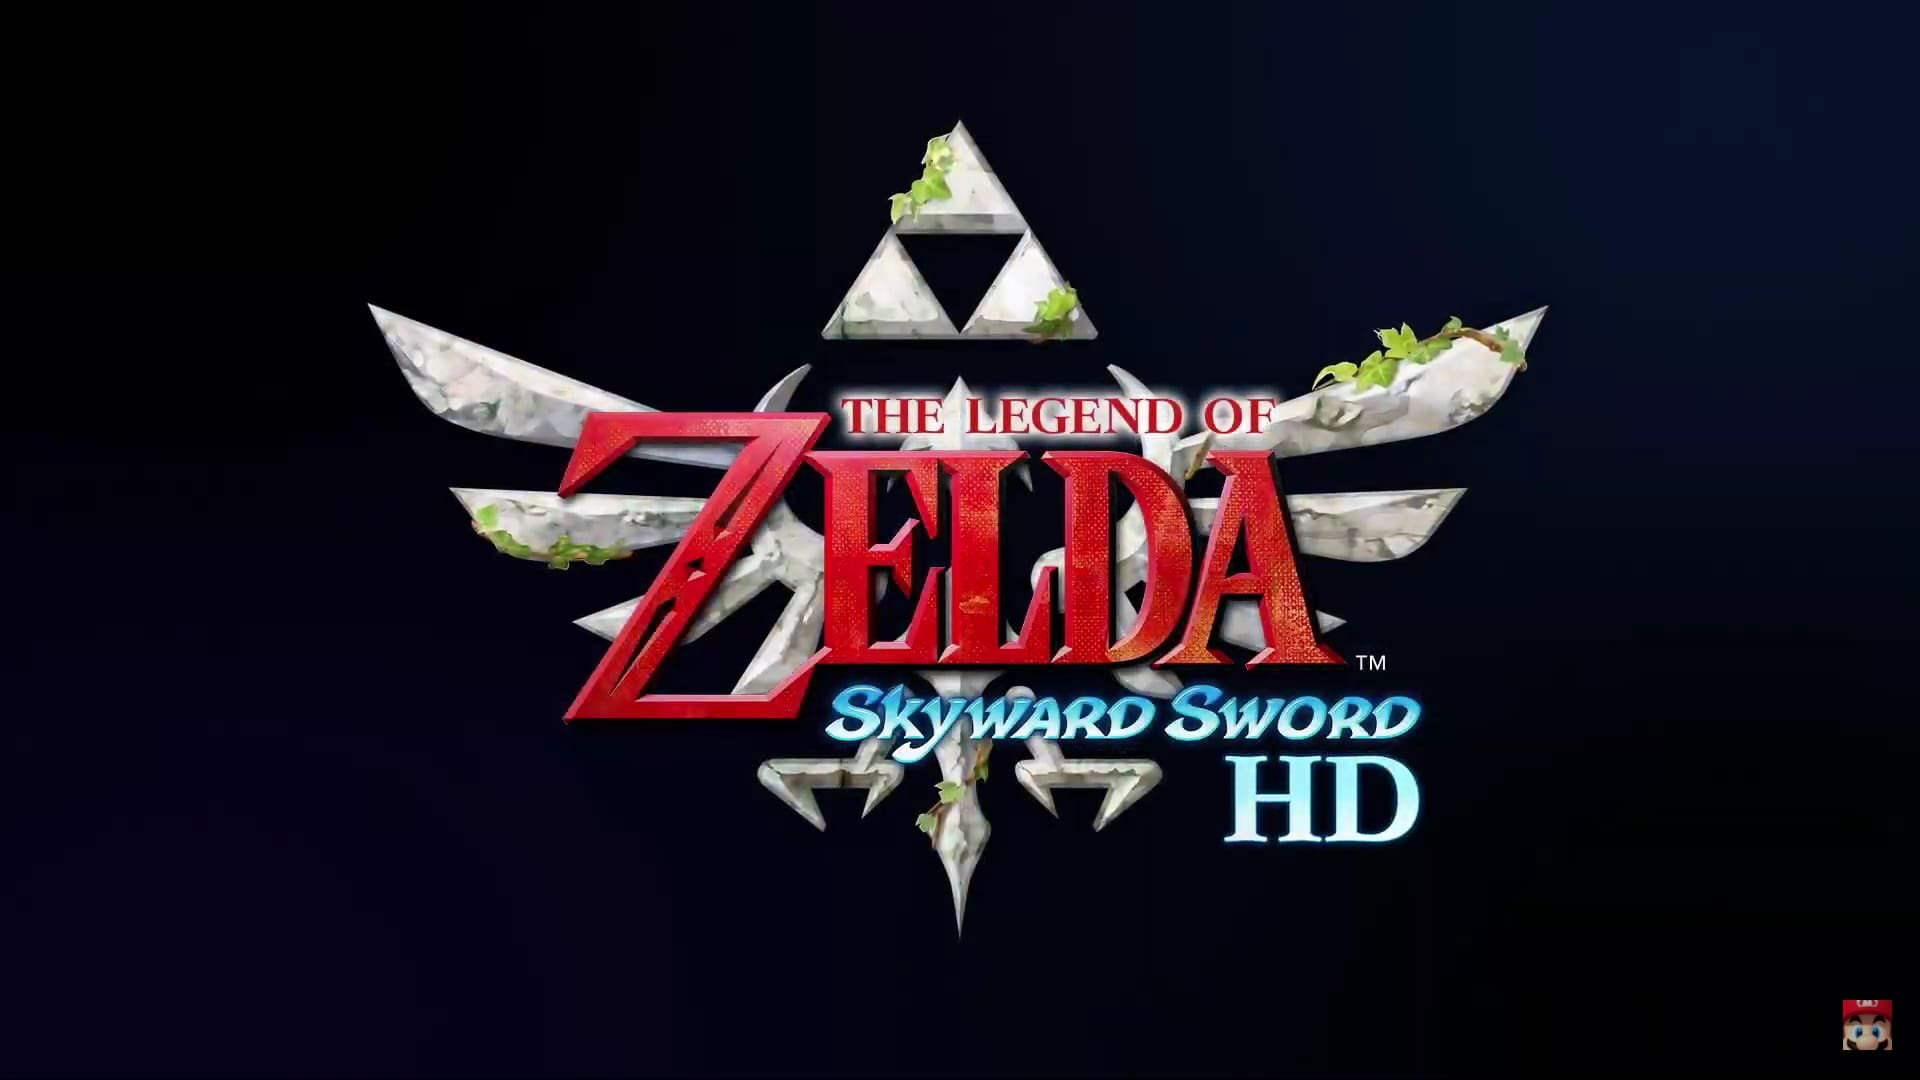 Skyward Sword HD is coming this summer

